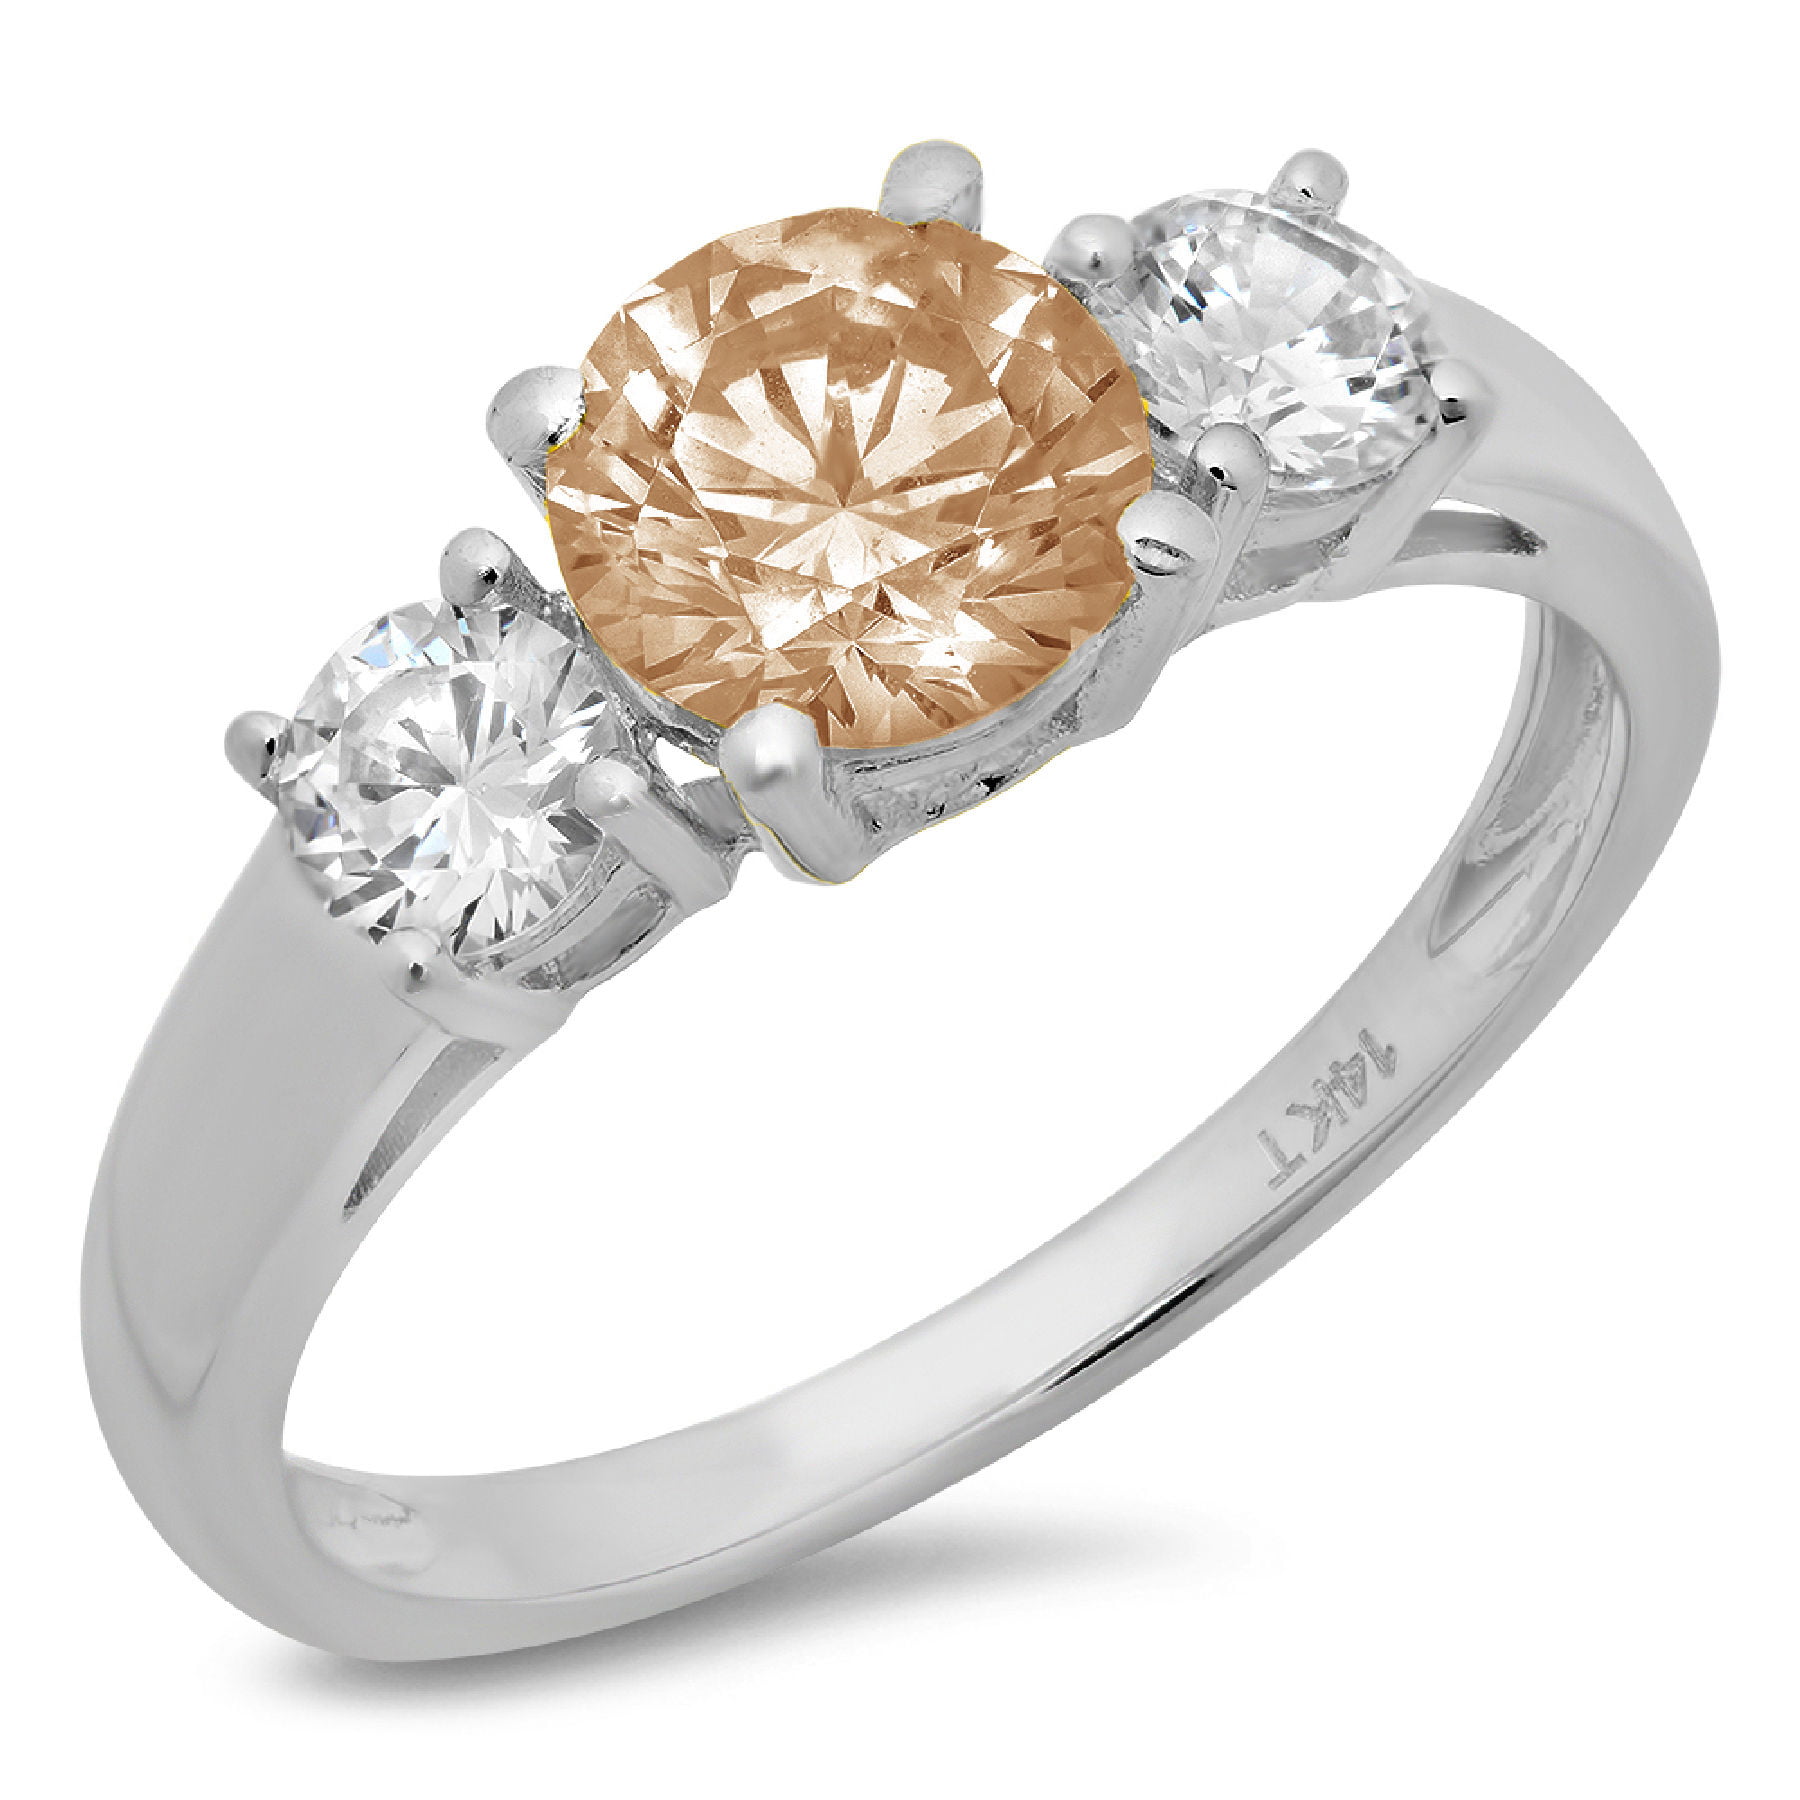 Details about   3Ct Round Cut VVS1 Diamond Solitaire Women Engagement Ring 14k White Gold Finish 